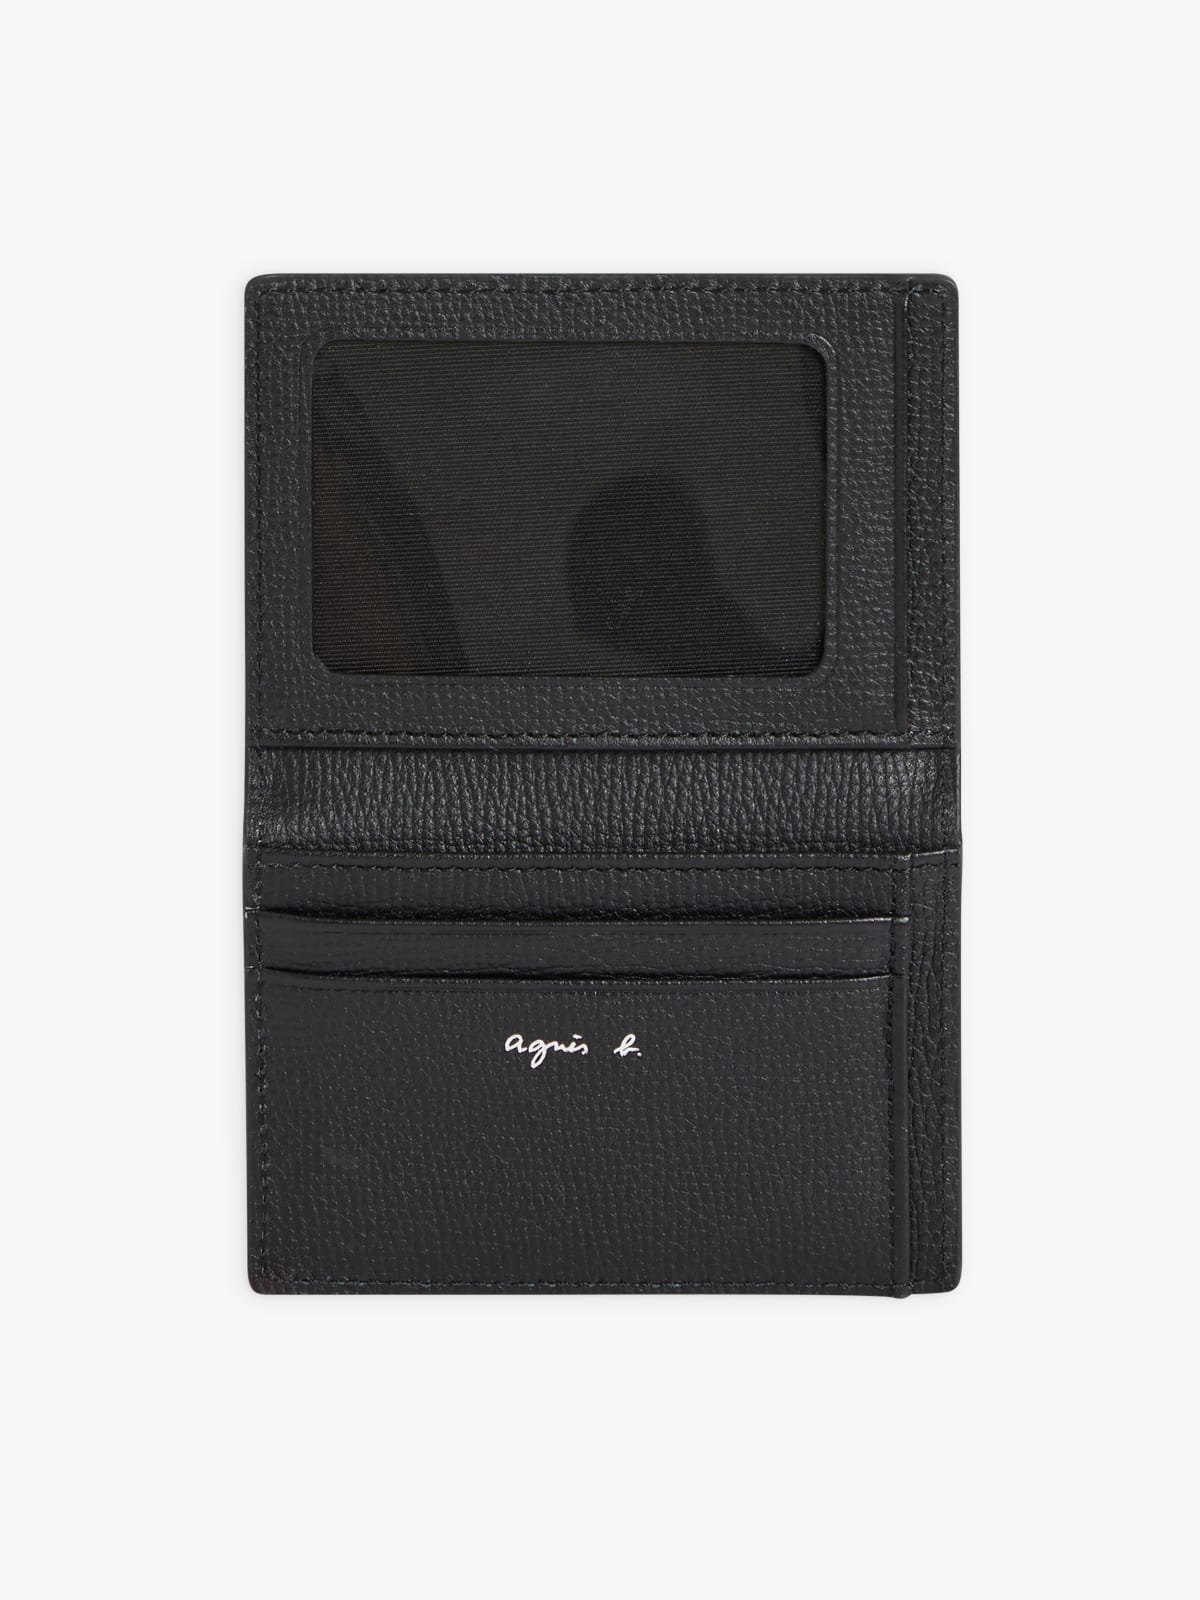 black leather folding wallet